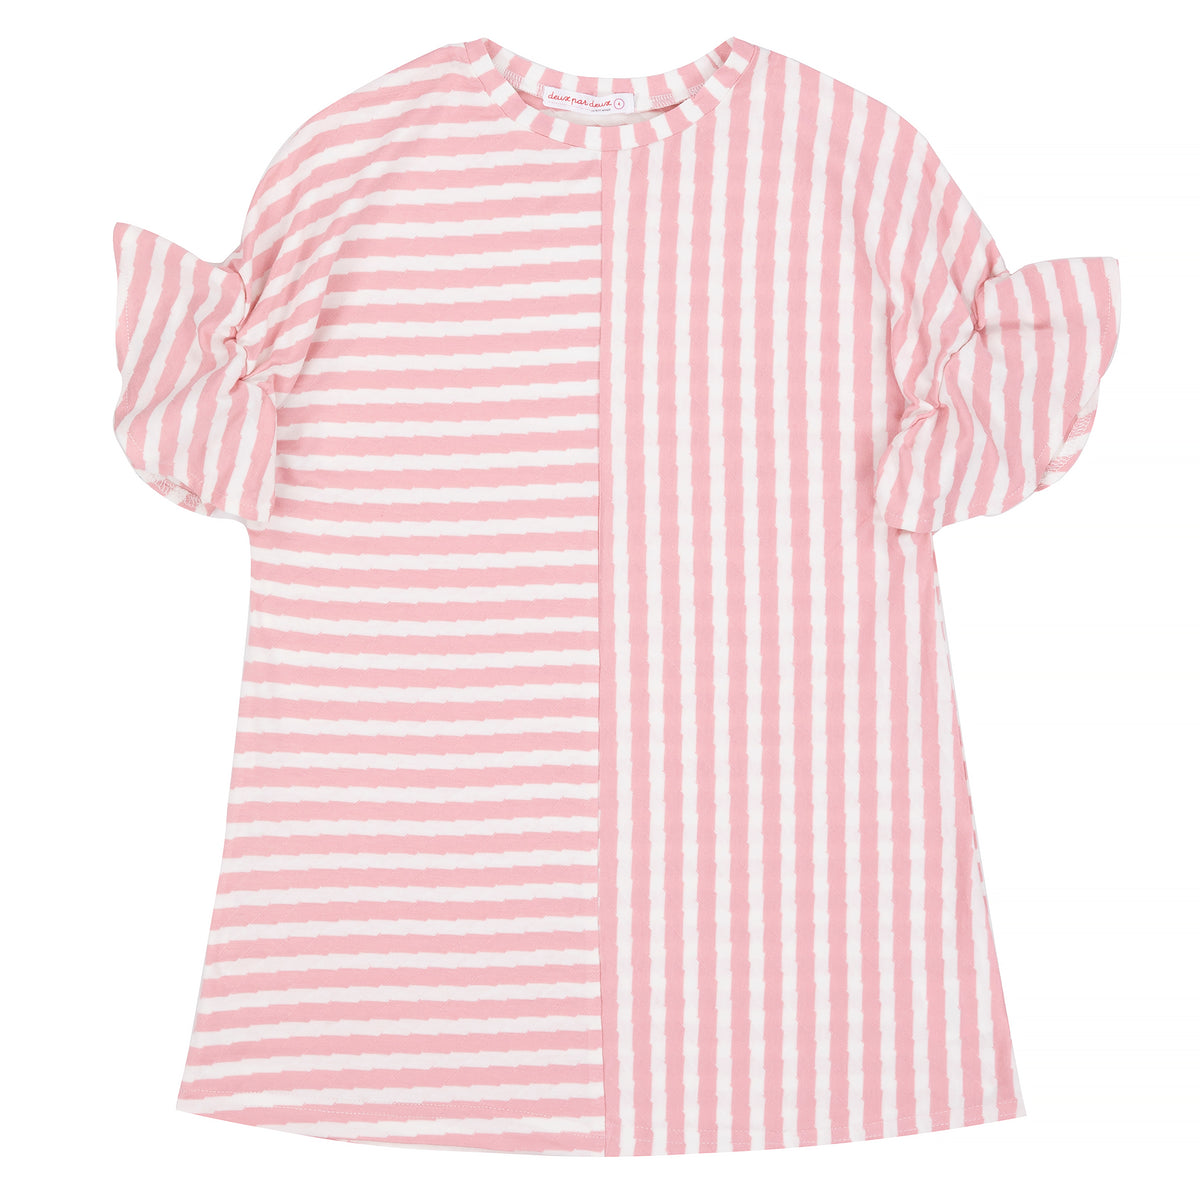 Girls Pink & White Striped Oversized Dress